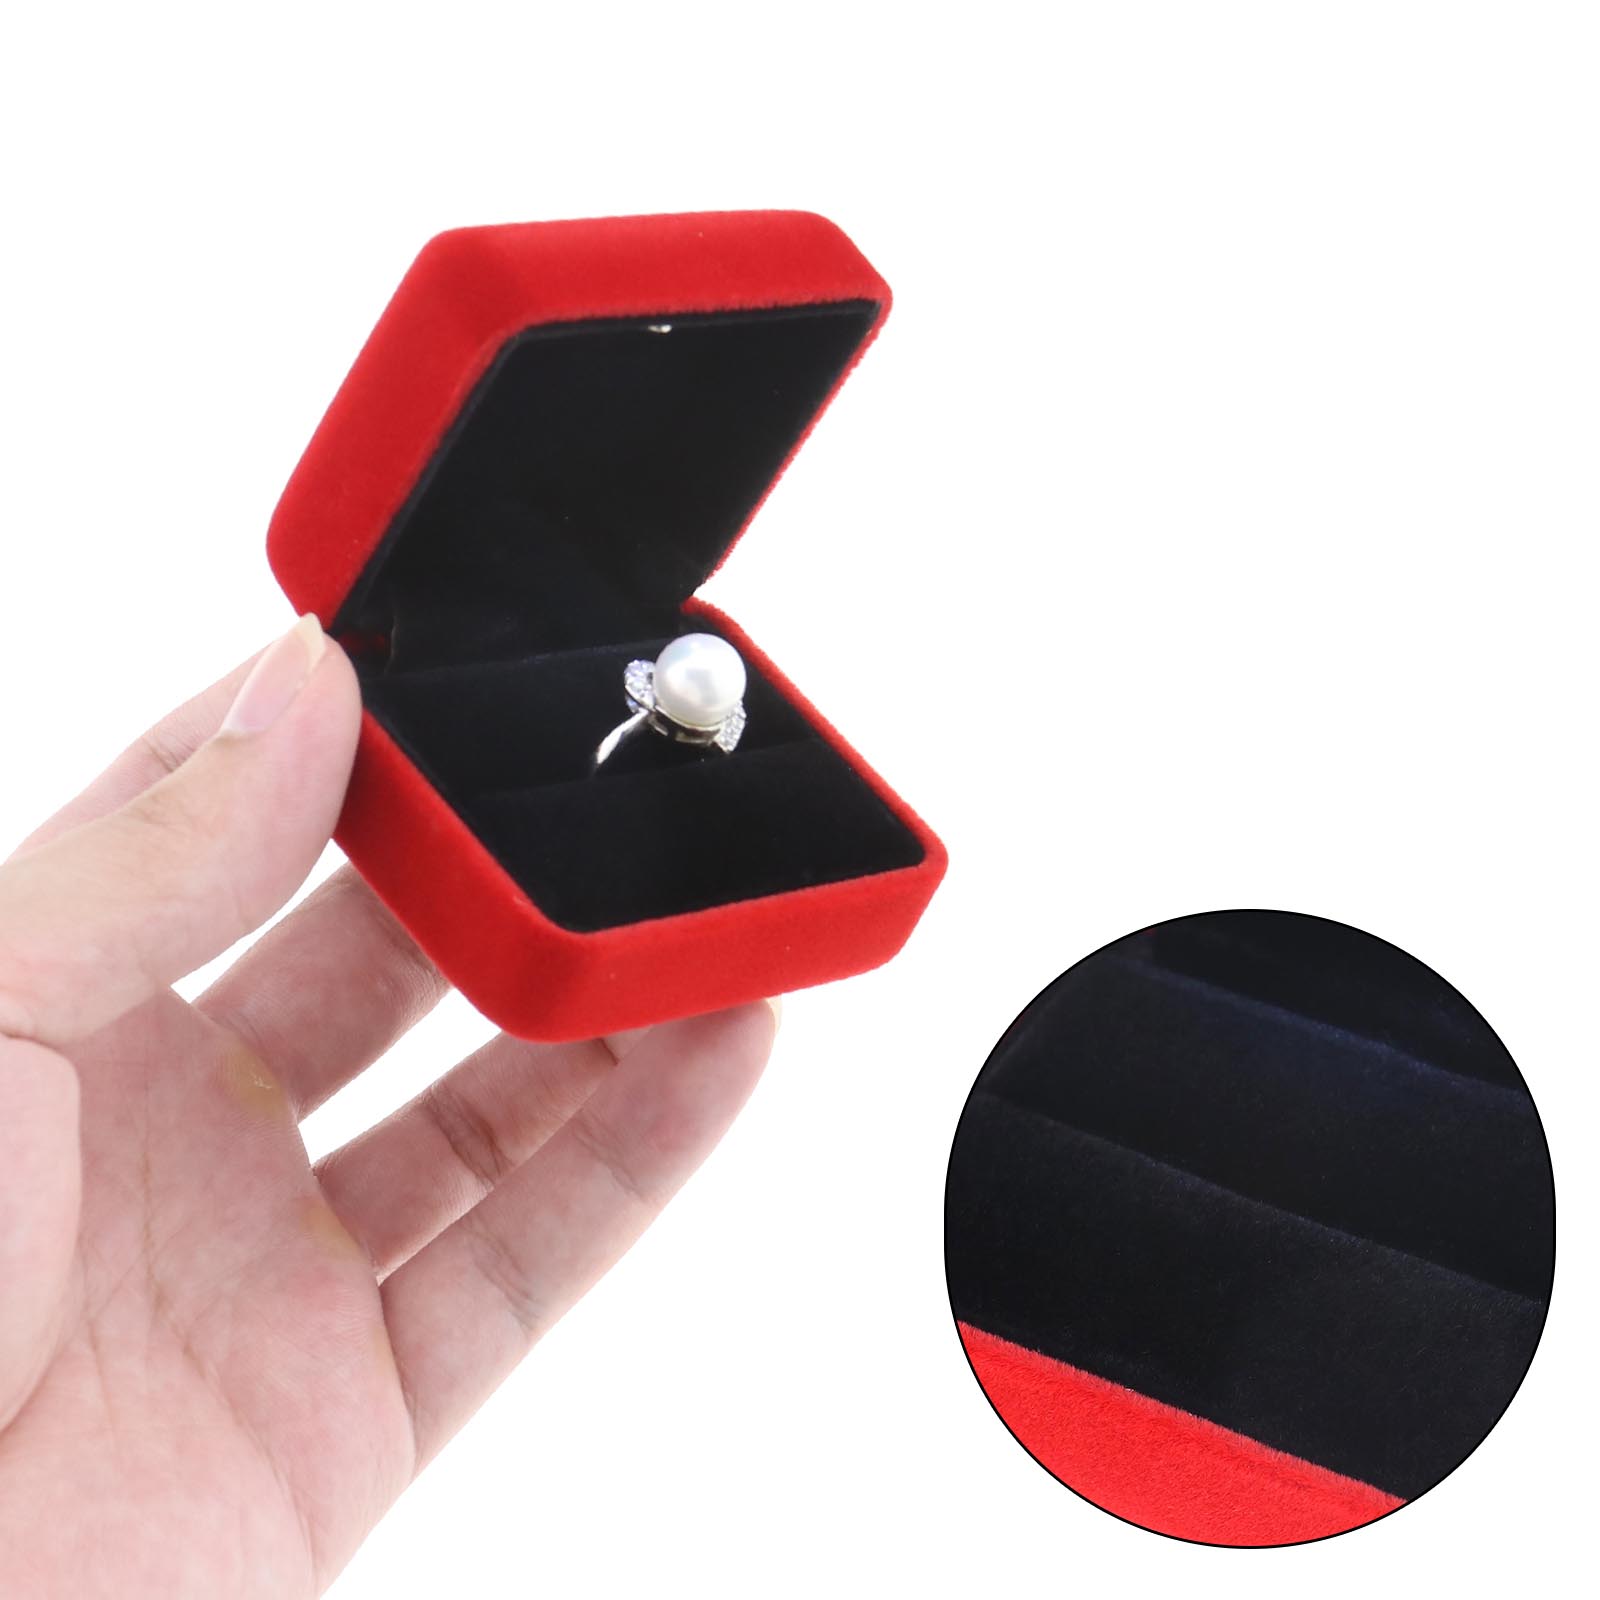 Grau/Schwarz/Rot 1x LED Ring Box Etui Ringschachtel Hochzeit LED Licht aus Samt